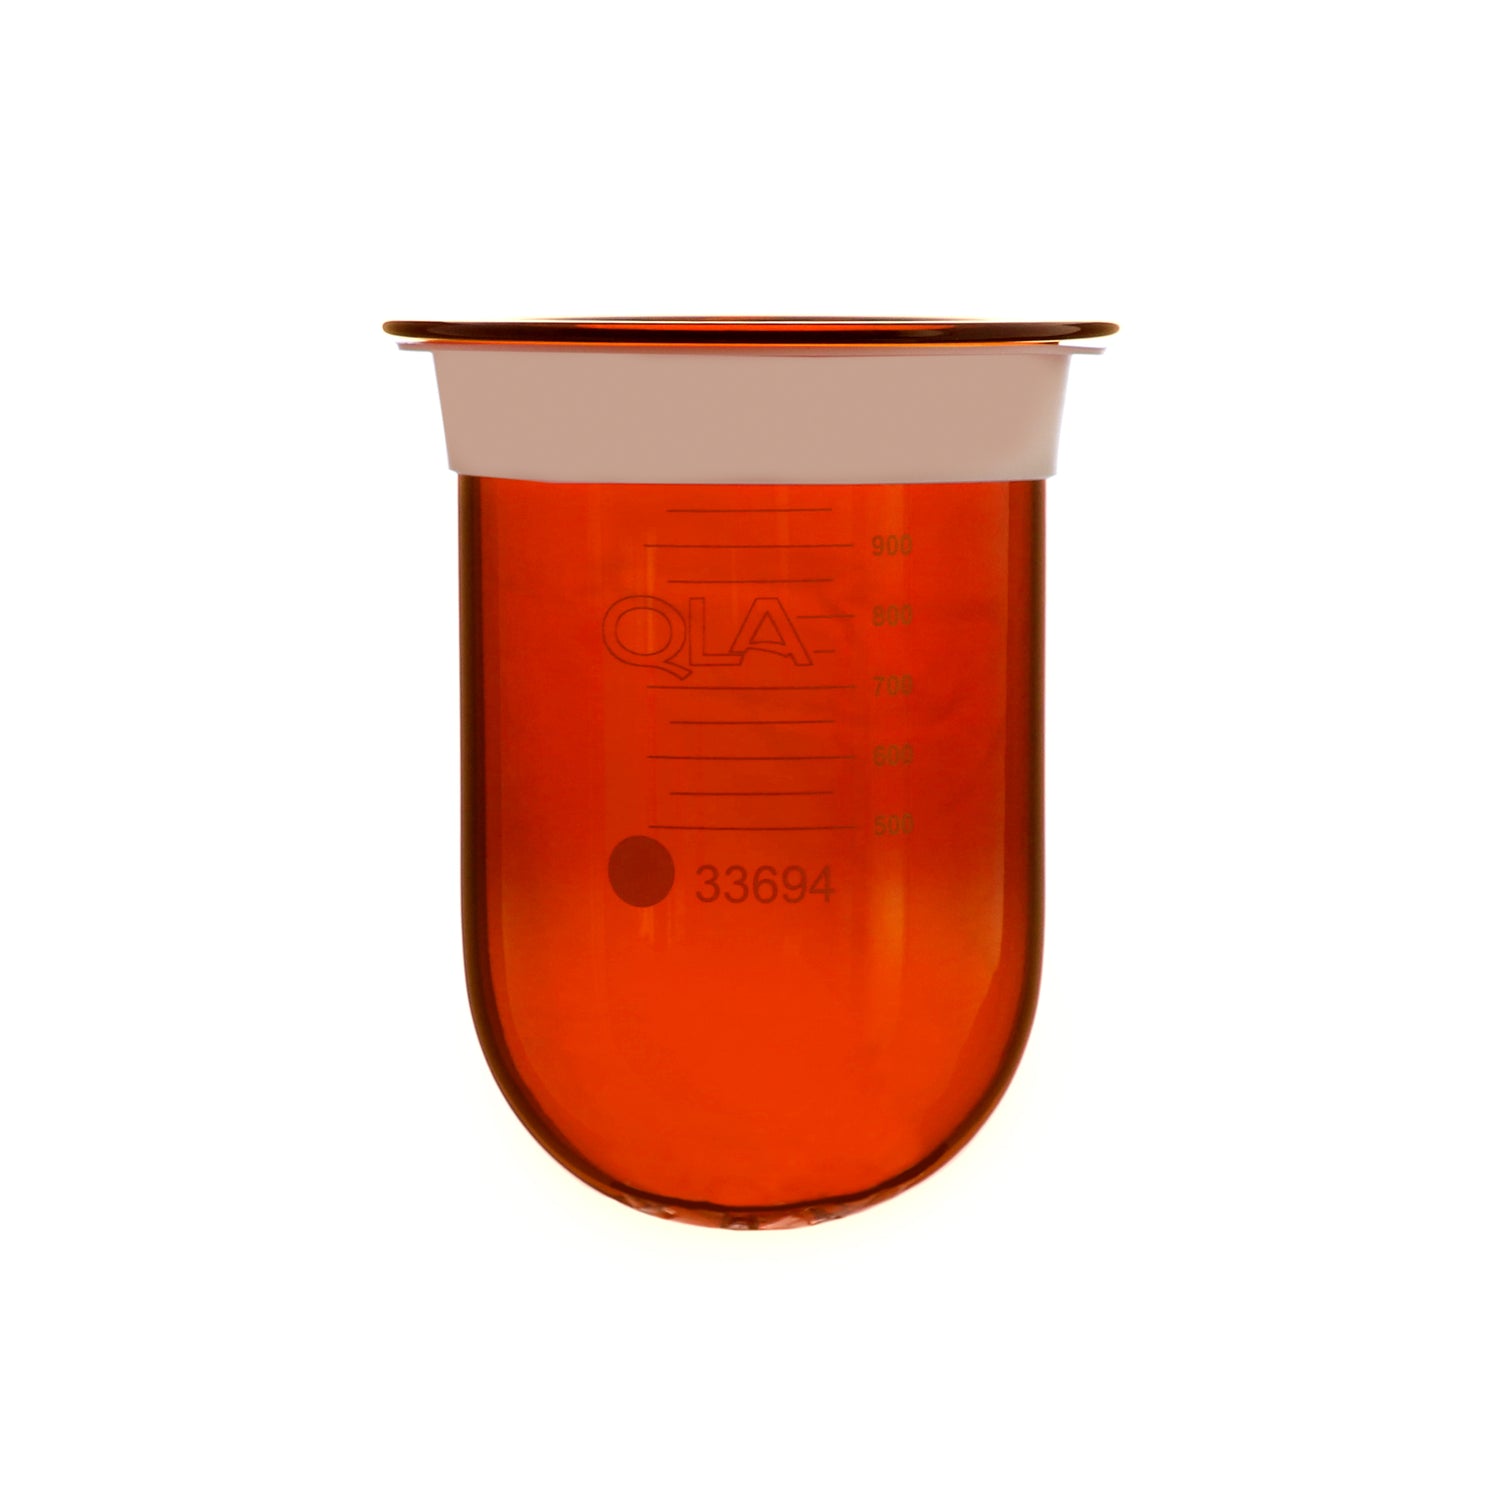 Distillique - Bottle sealing wax 1kg (Gold)